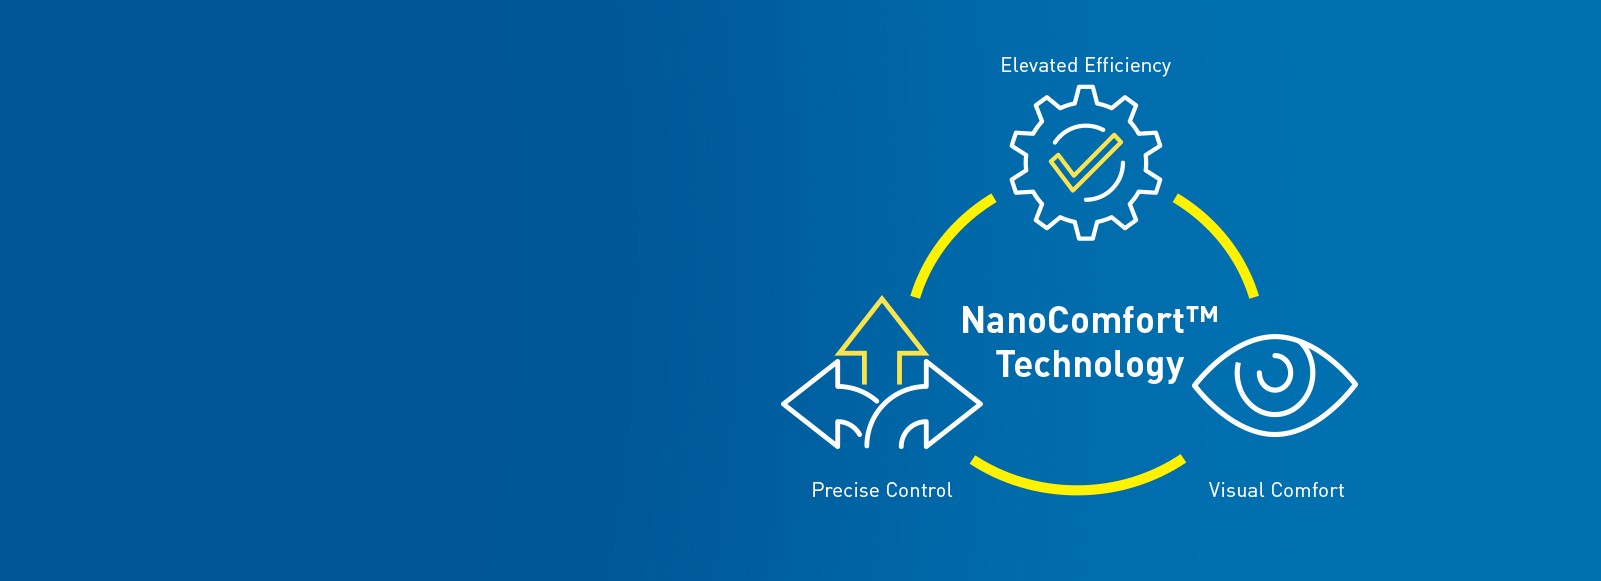 NanoComfort Homepage Banner